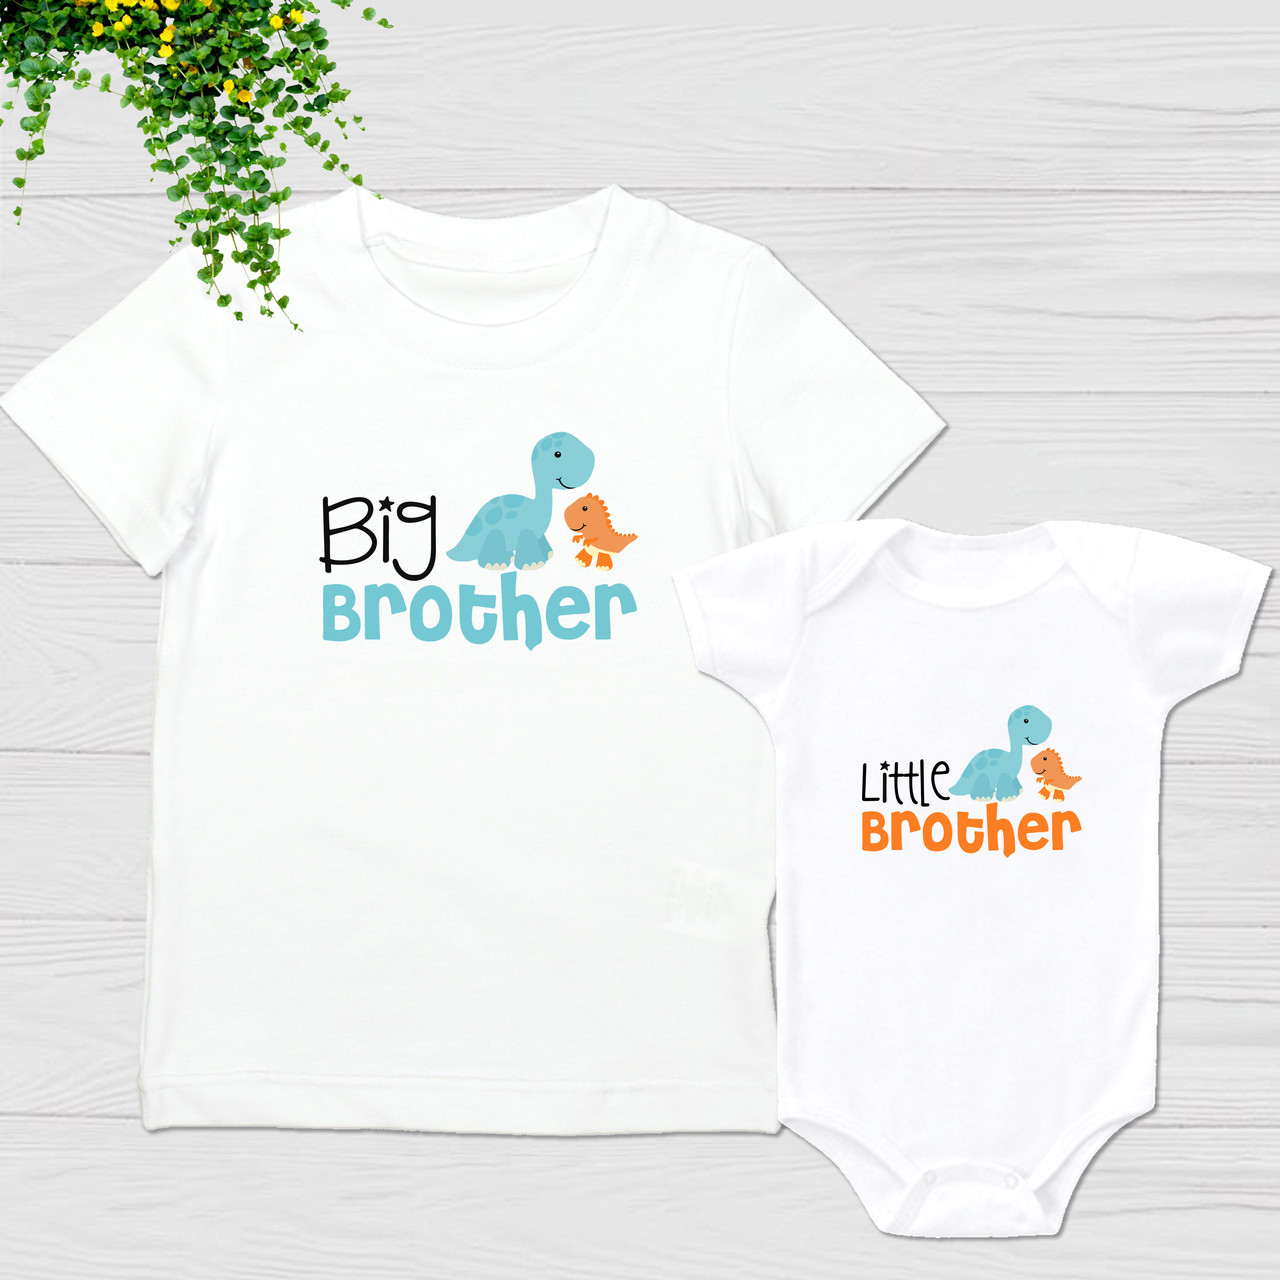 Парні футболки Family Look з принтом "Big brother and Little brother" Push IT